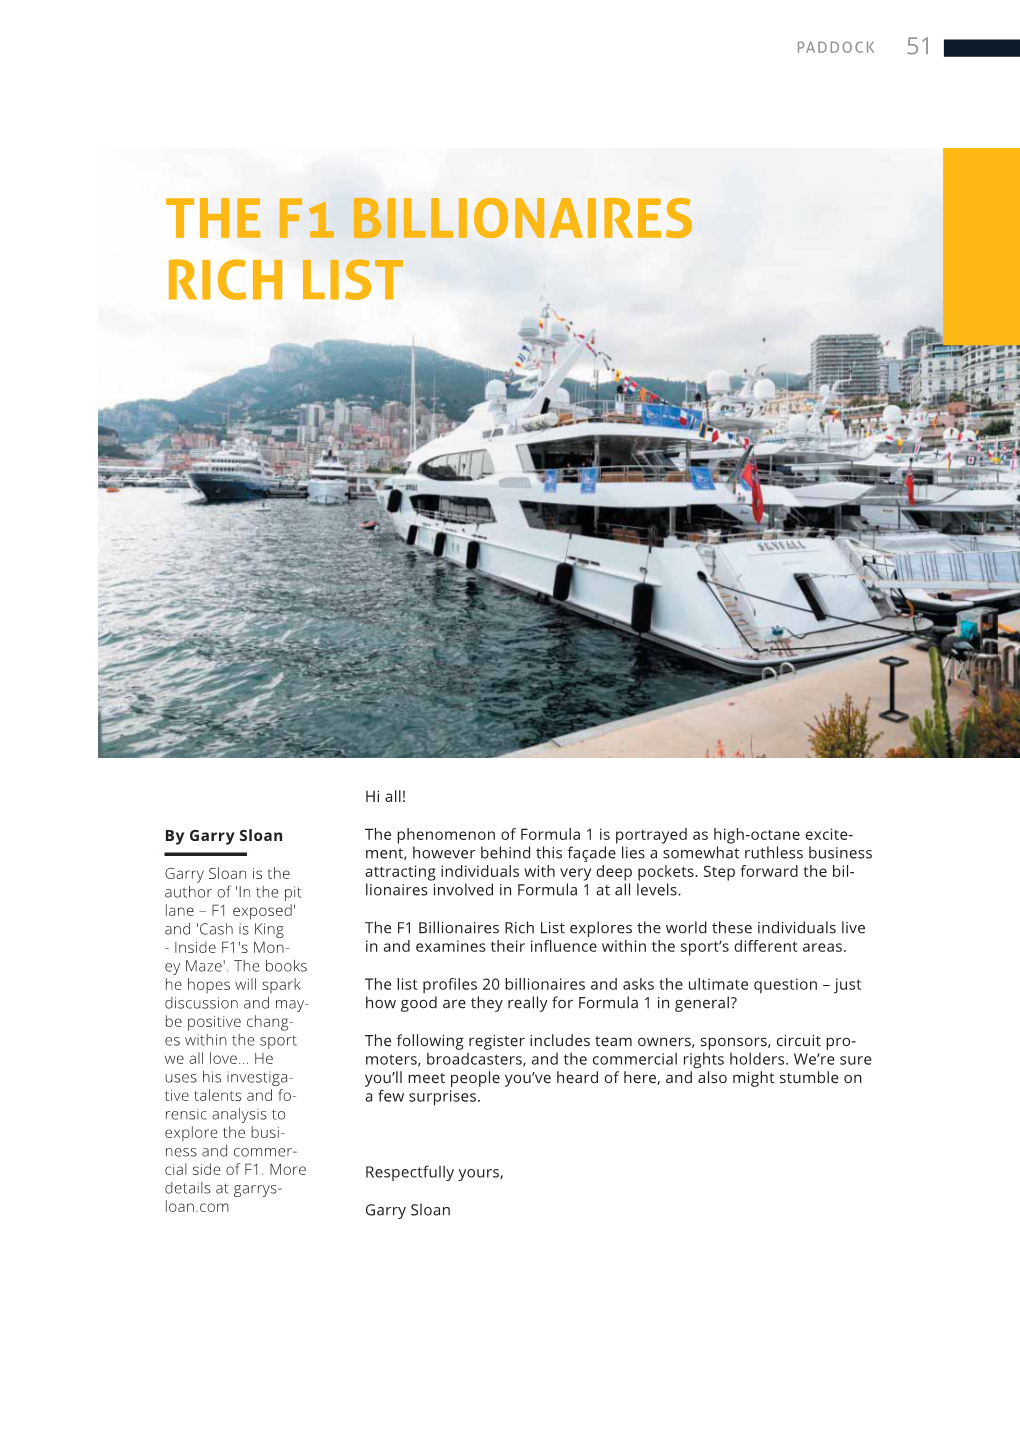 The F1 Billionaires Rich List